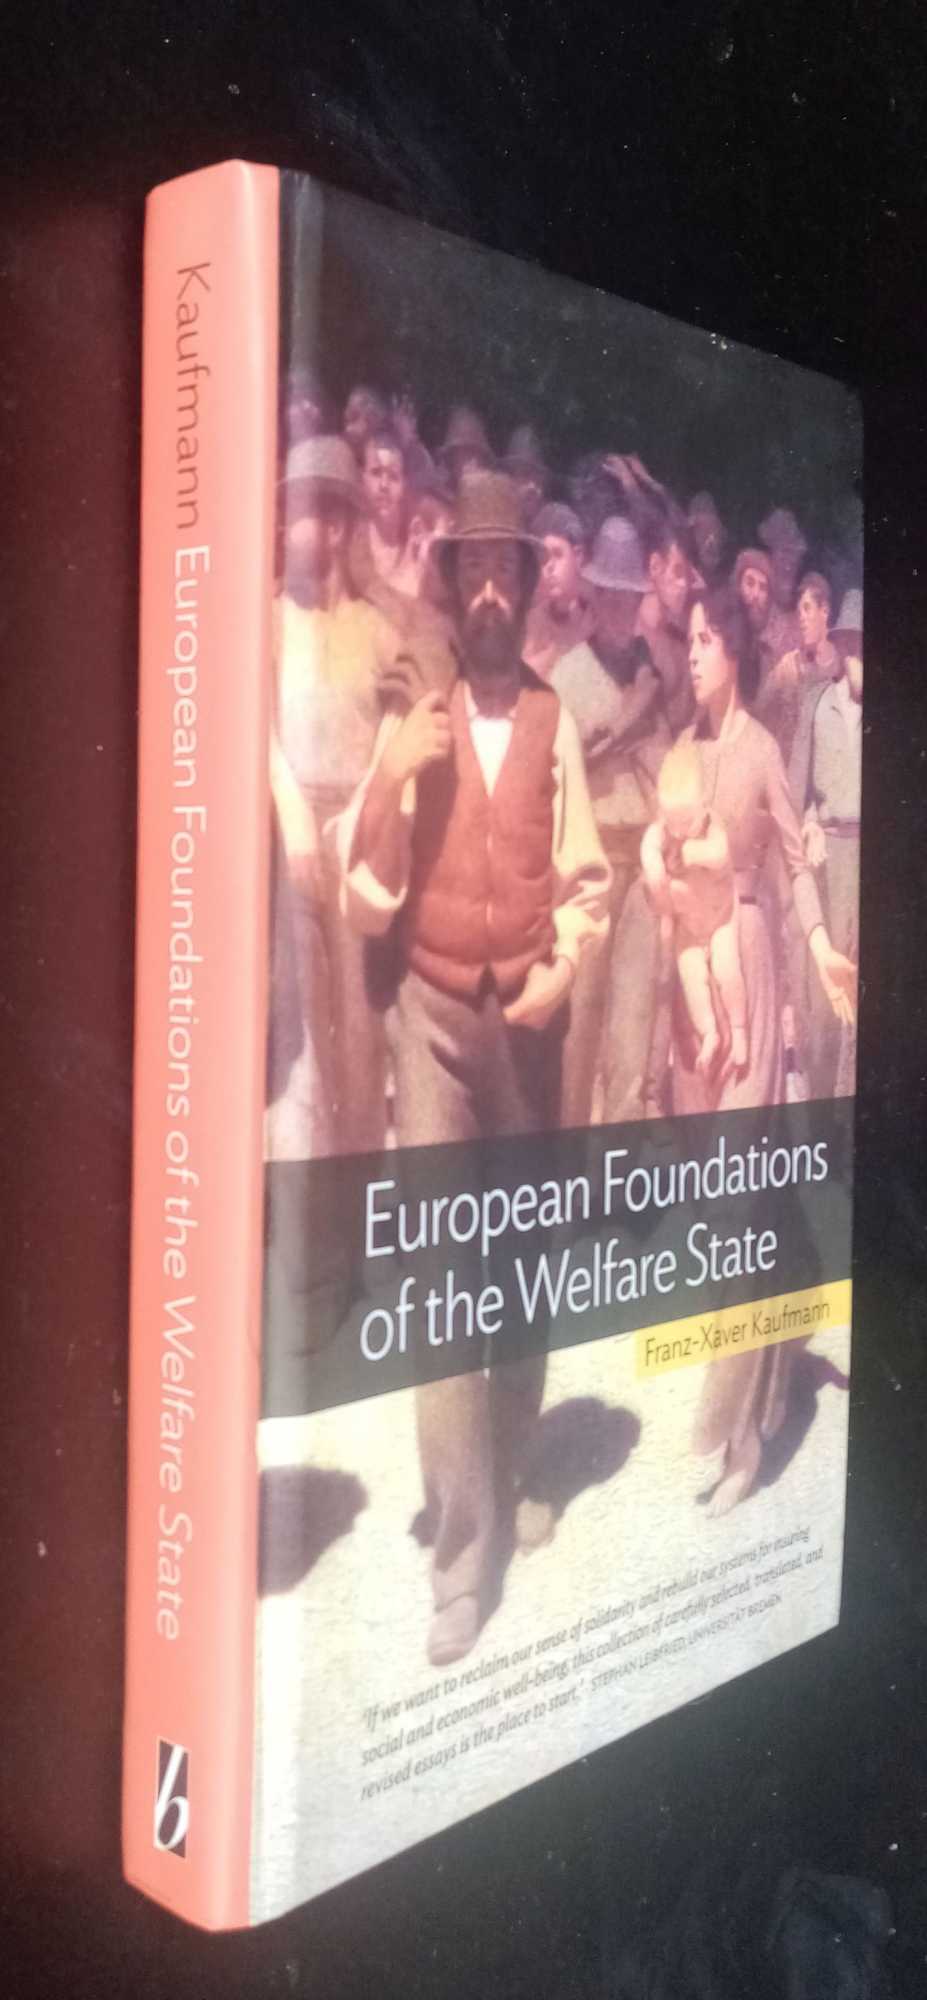 Franz-Xaver Kaufmann - European Foundations of the Welfare State